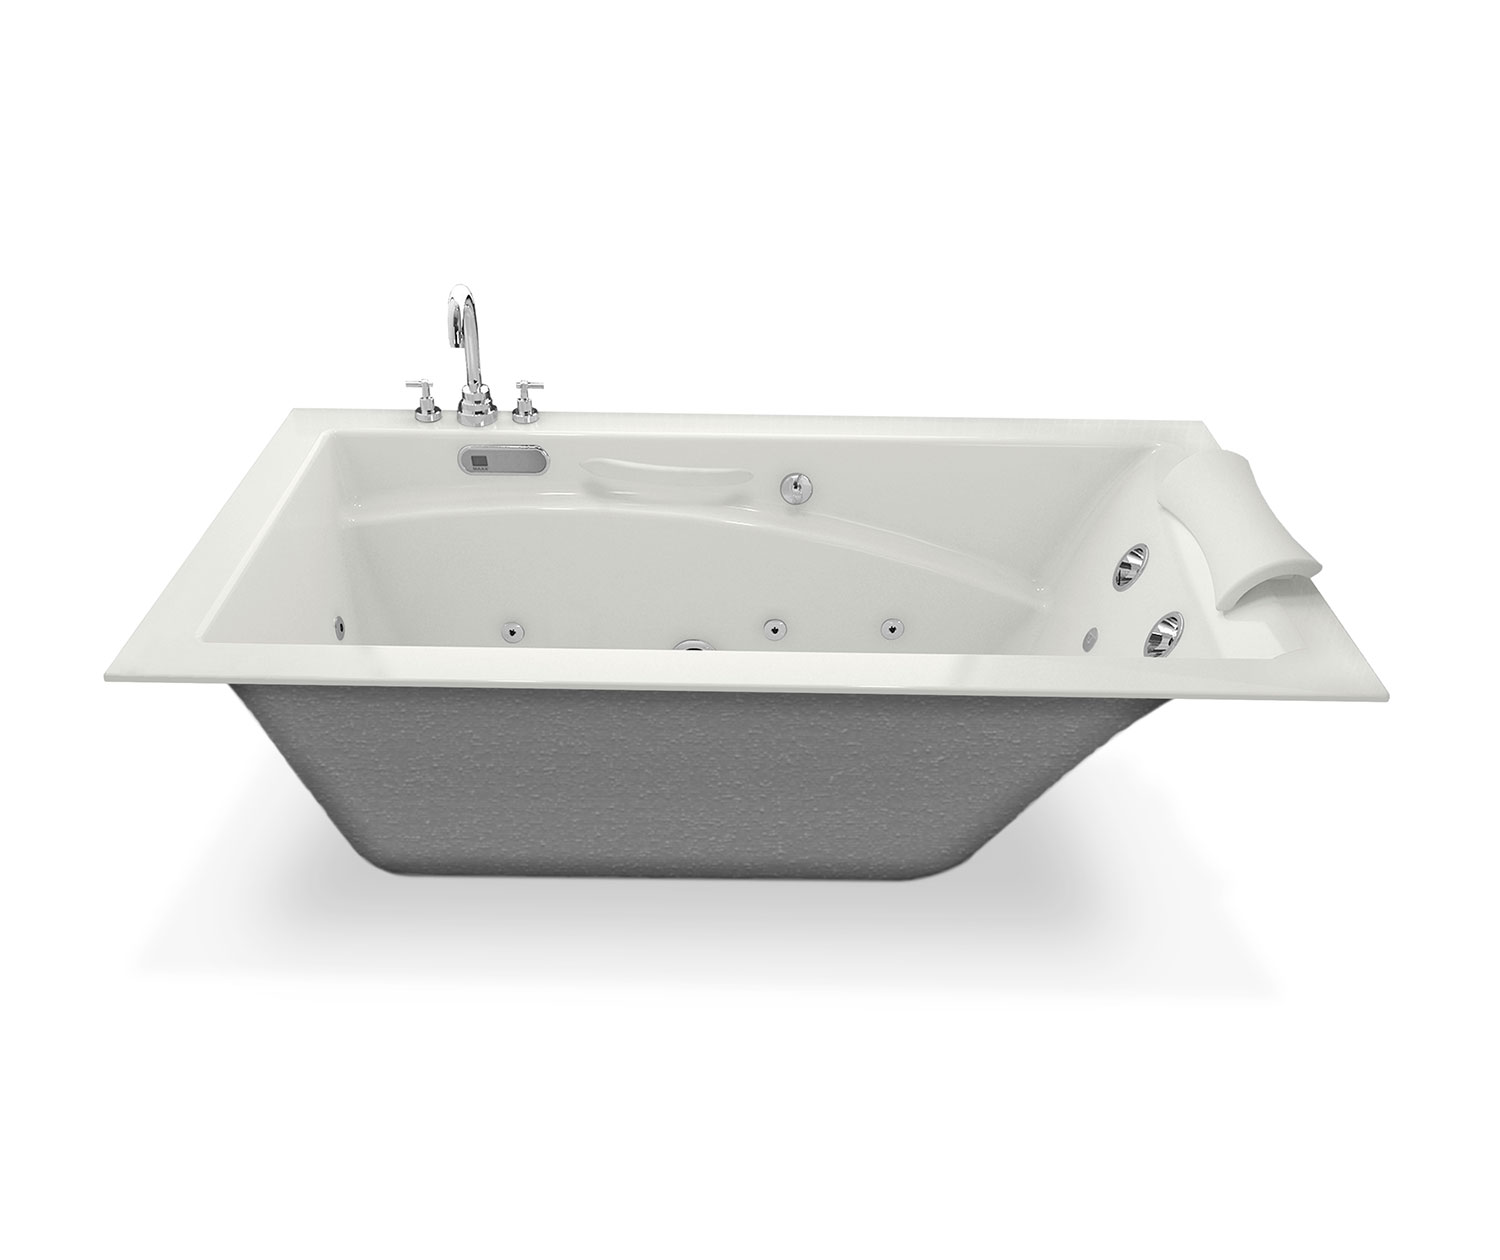 Optik 6636 Acrylic Alcove End Drain Bathtub in White | Bath, Maax en